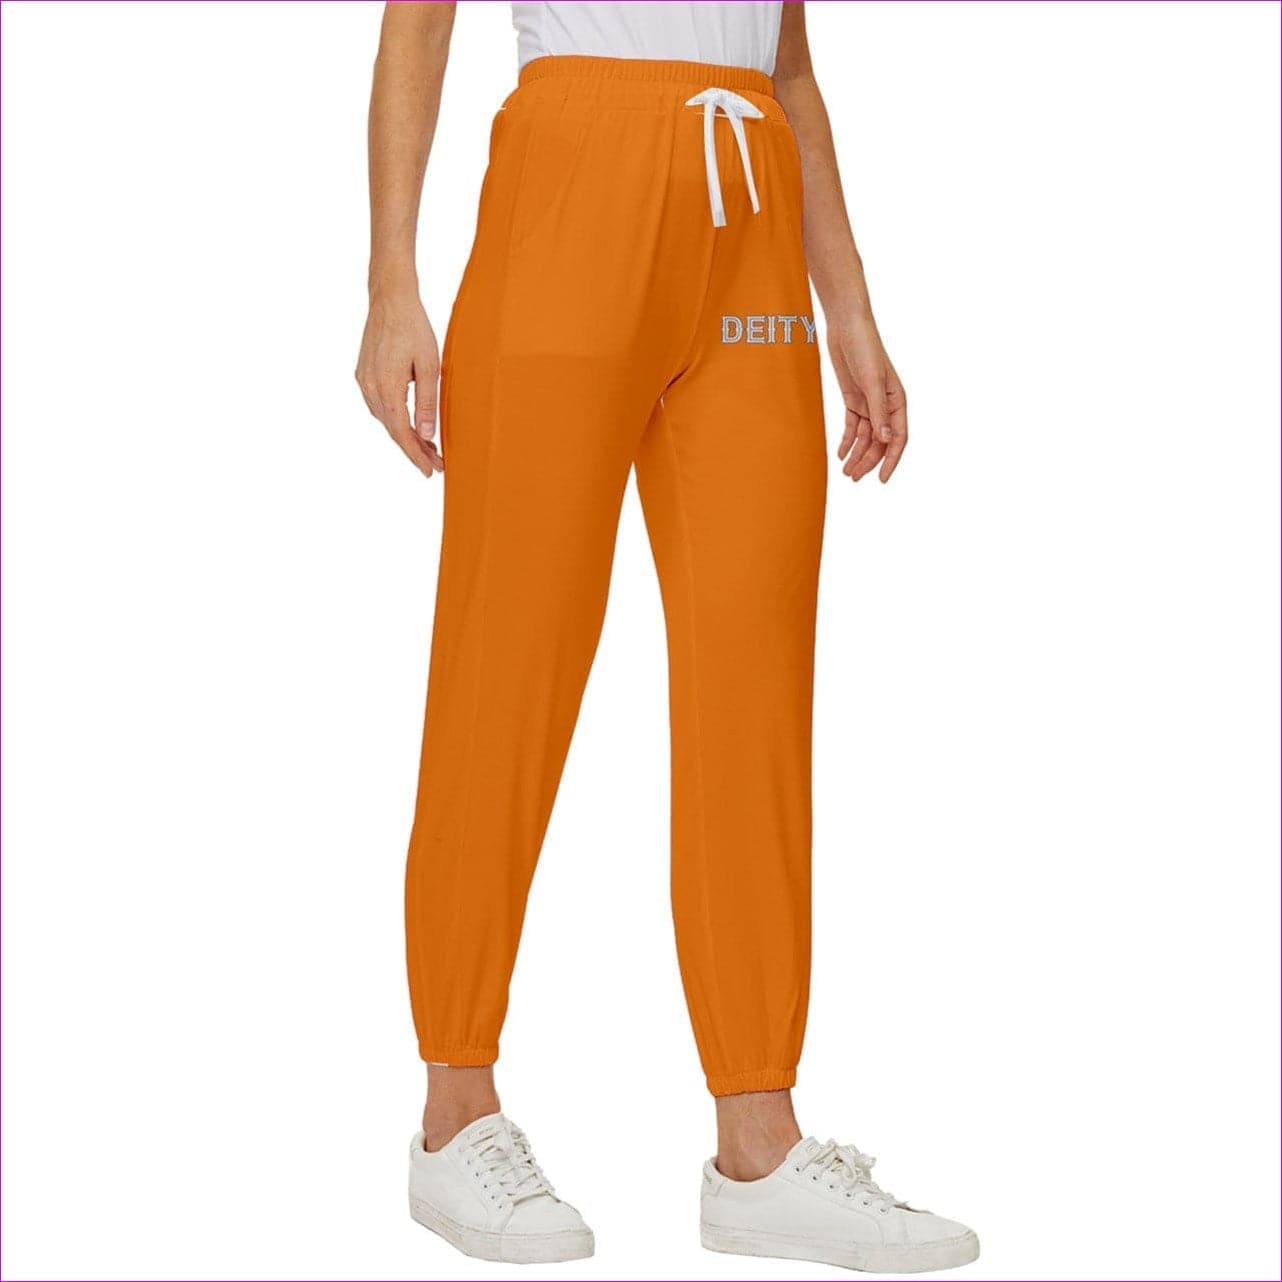 - Deity Cropped Drawstring Pants - Orange - womens sweatpants at TFC&H Co.